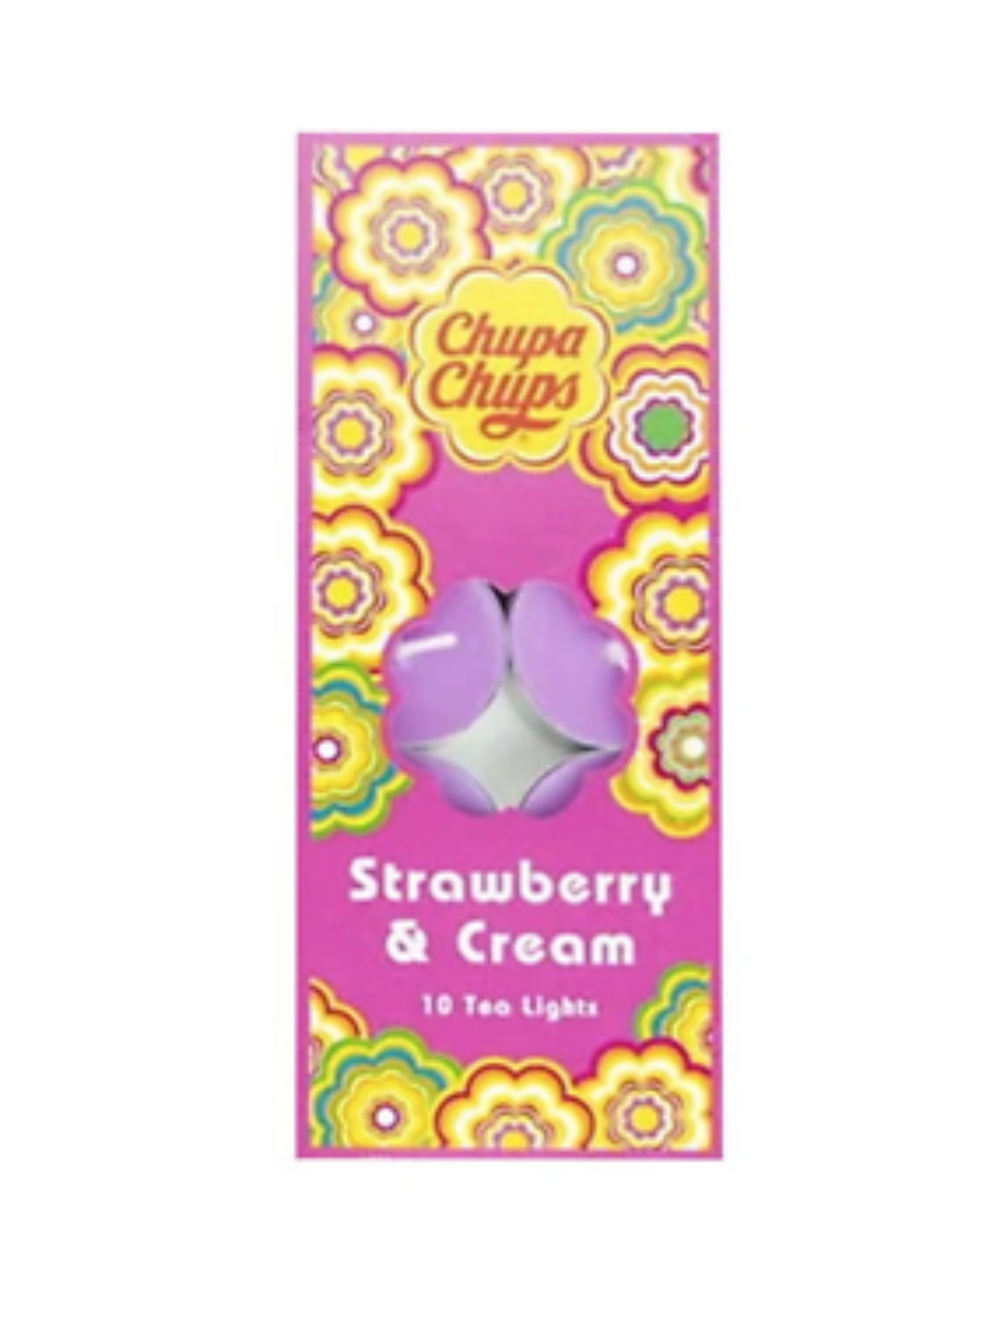 Chupa Chups Strawberry & Cream Tea Light Candles - 10pk